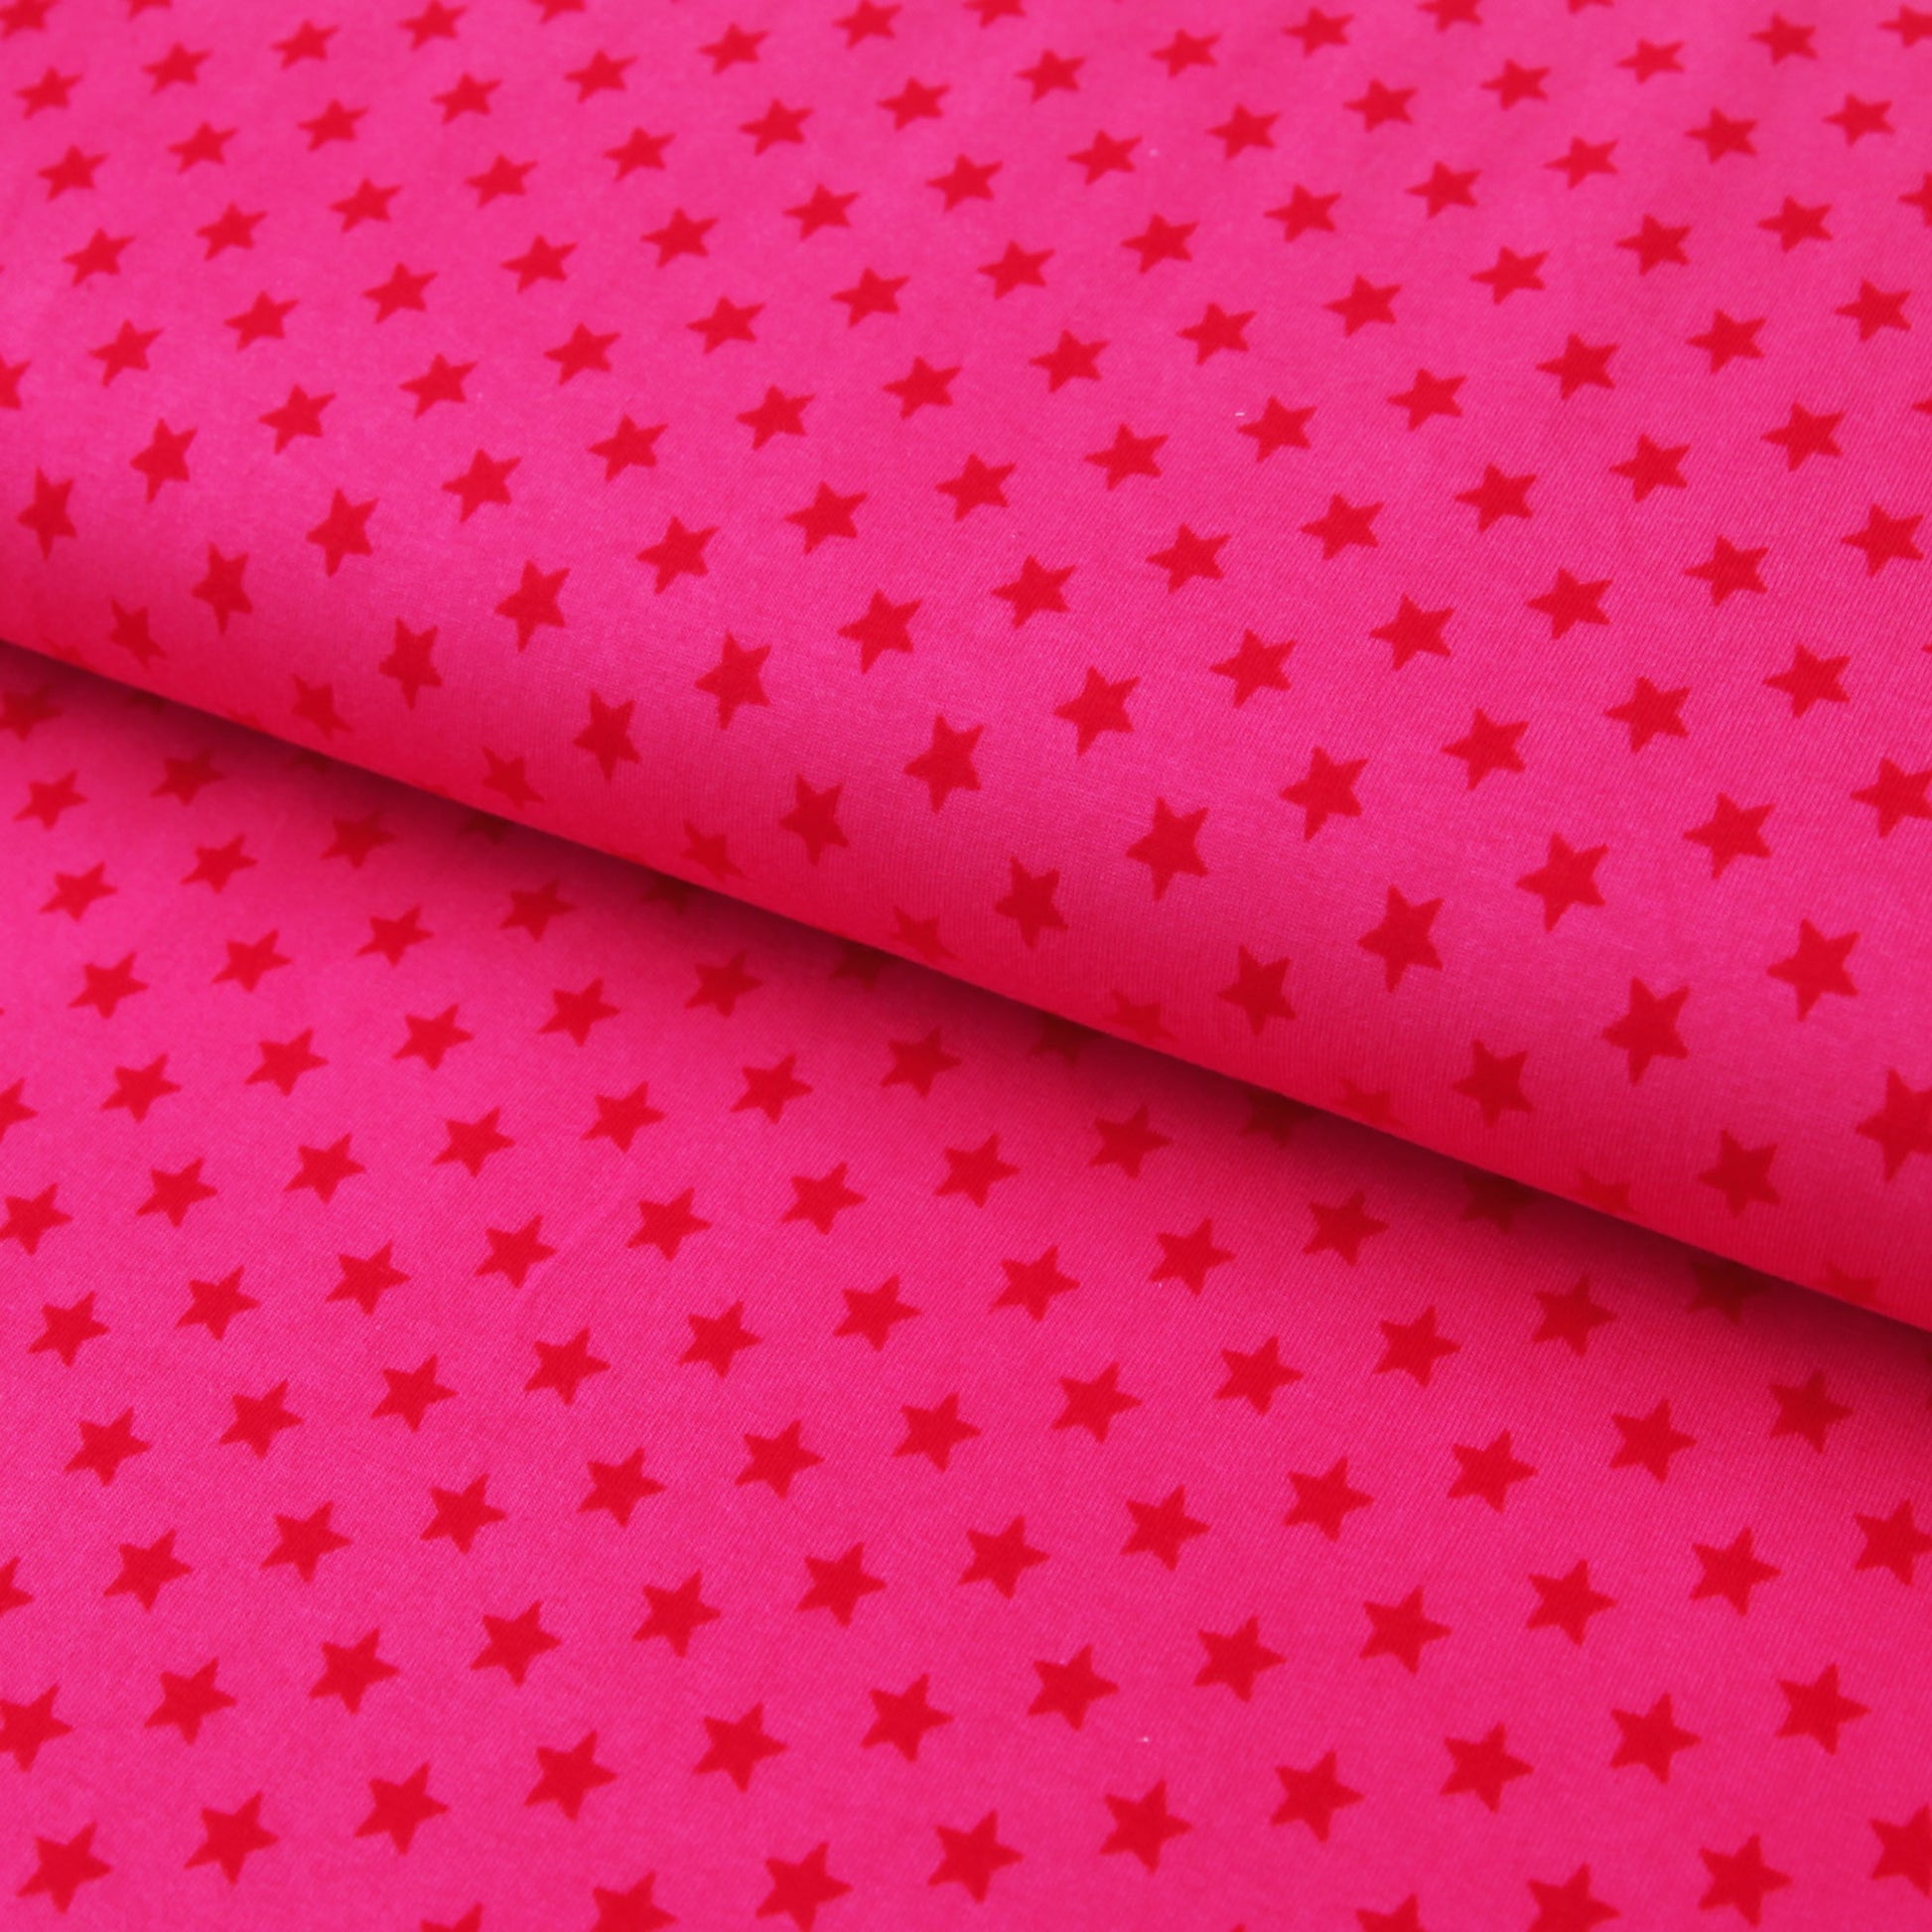 Baumwolljersey "rote 1cm Sterne auf fuchsia" - Jersey Stoff in pink